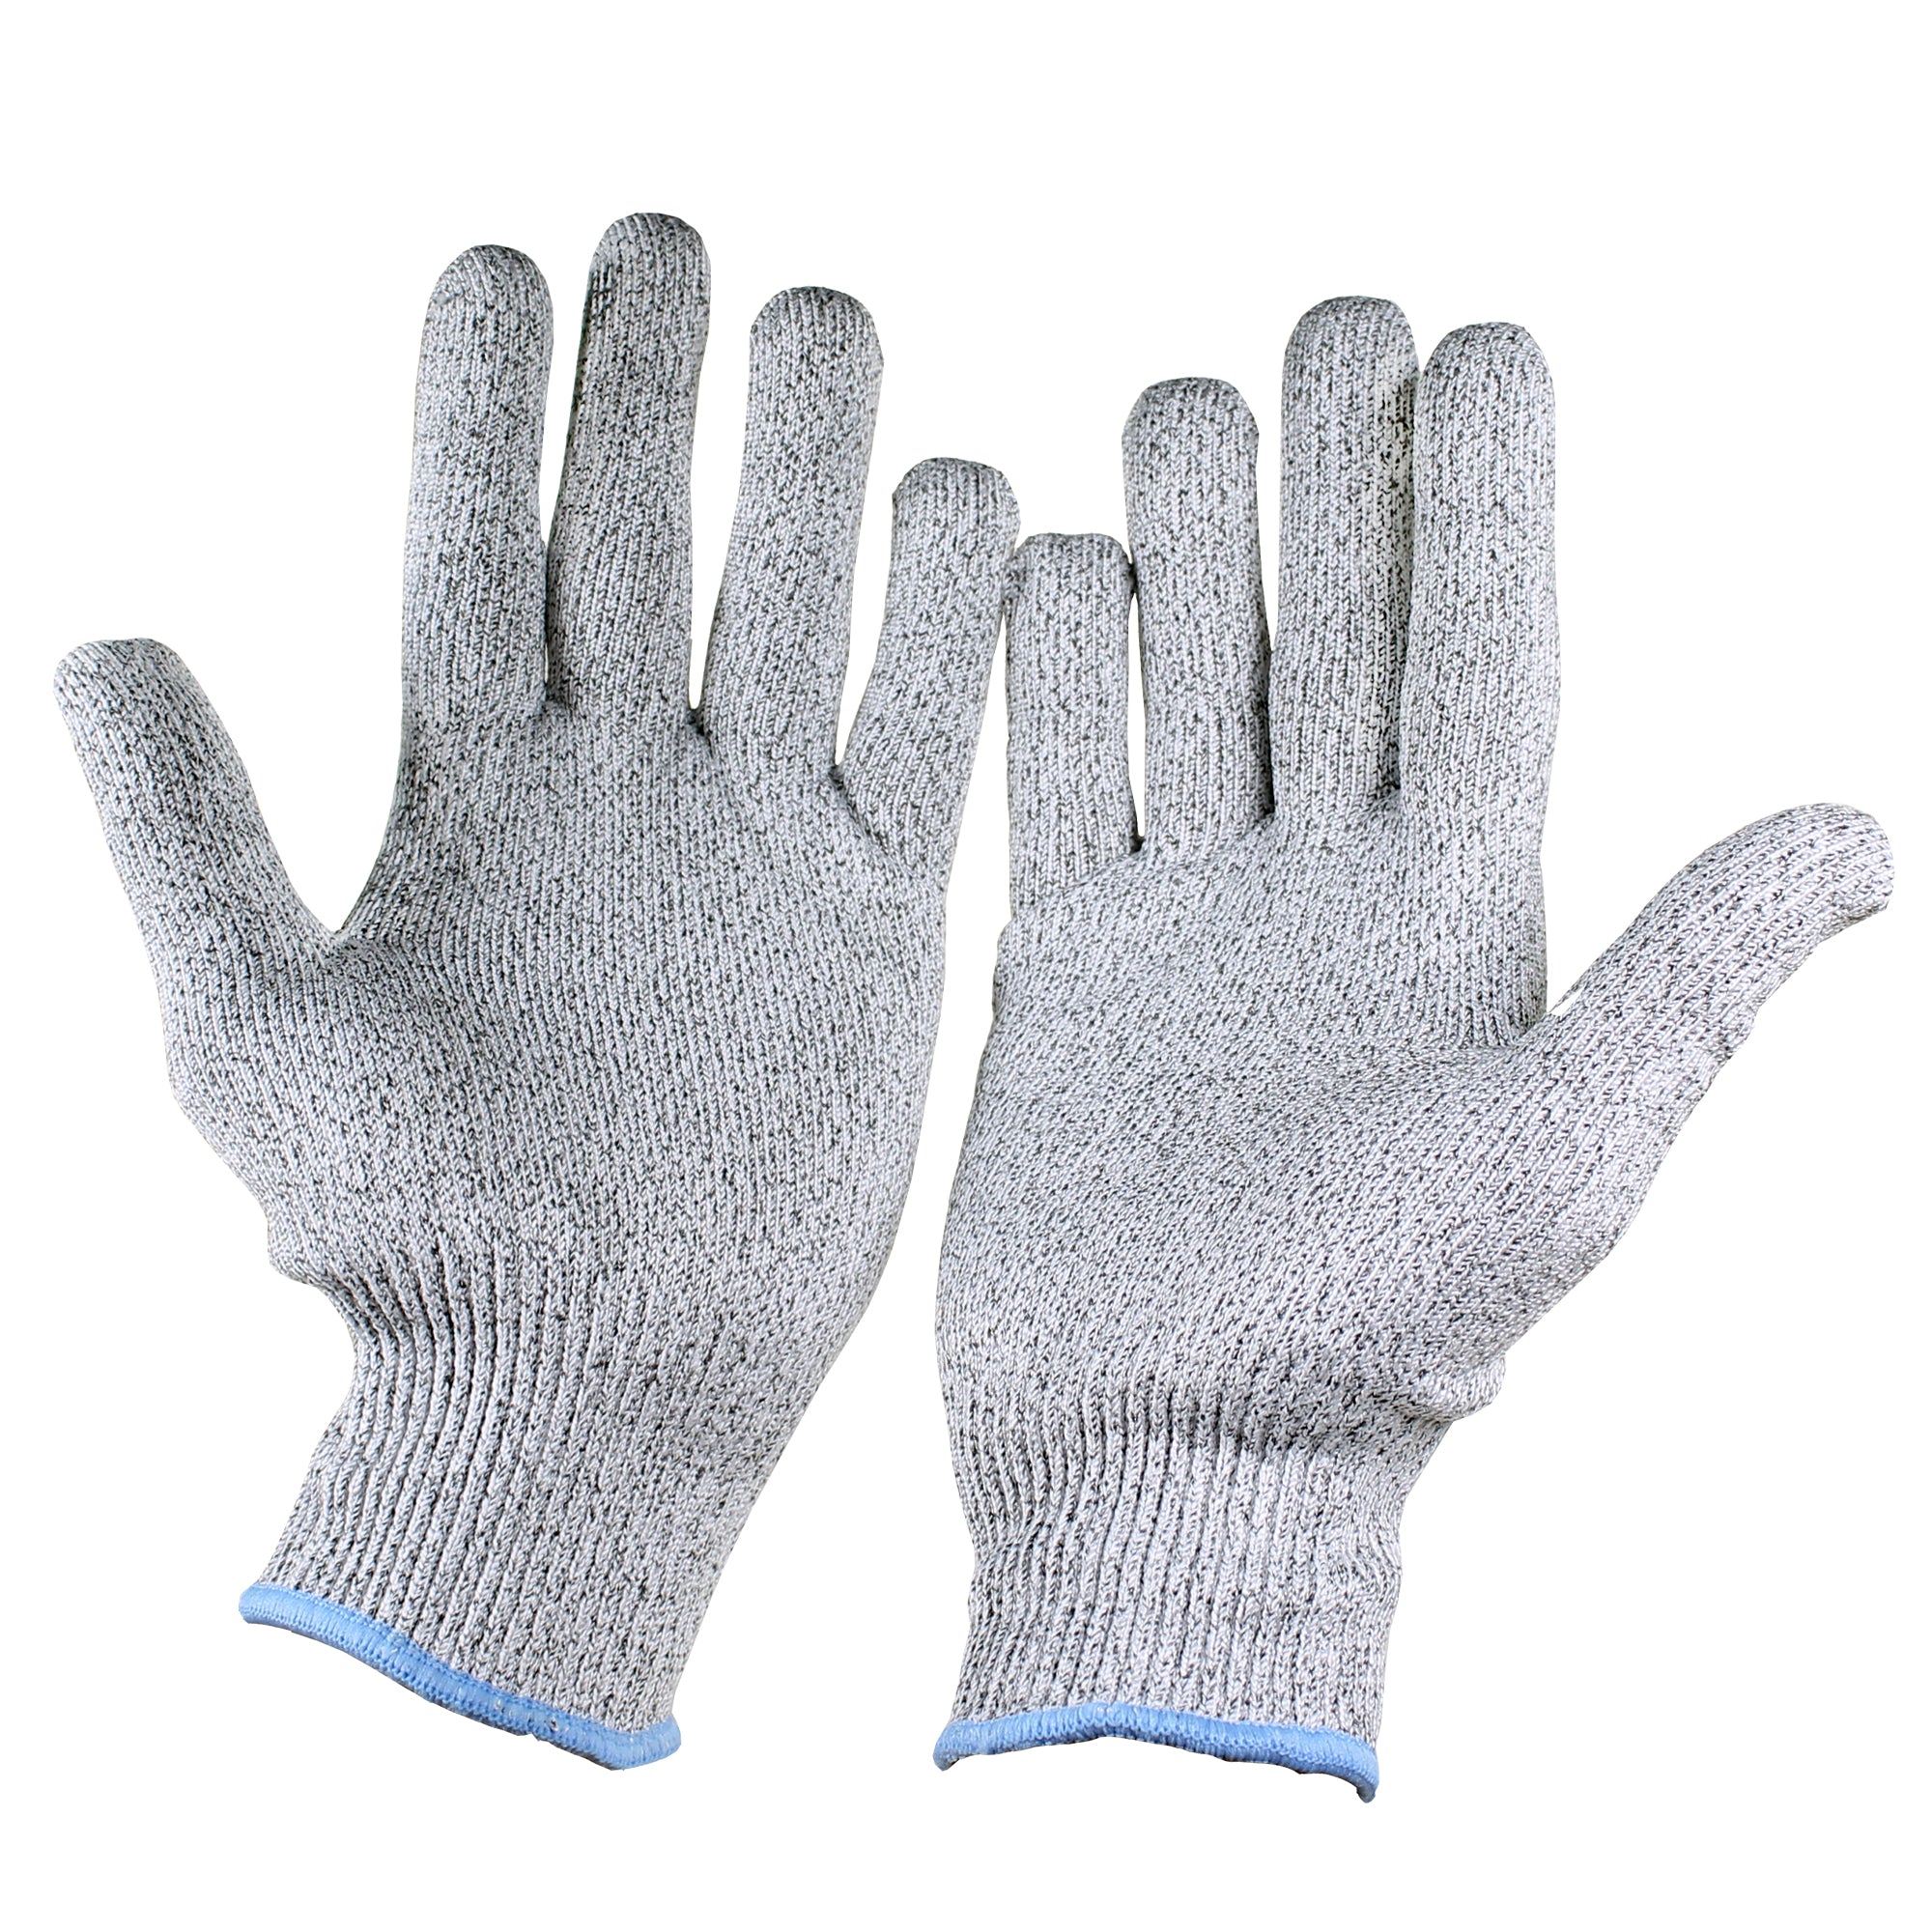 Se Beskyt dine fingre med skærsikre handsker i køkkenet hos Lammeuld.dk